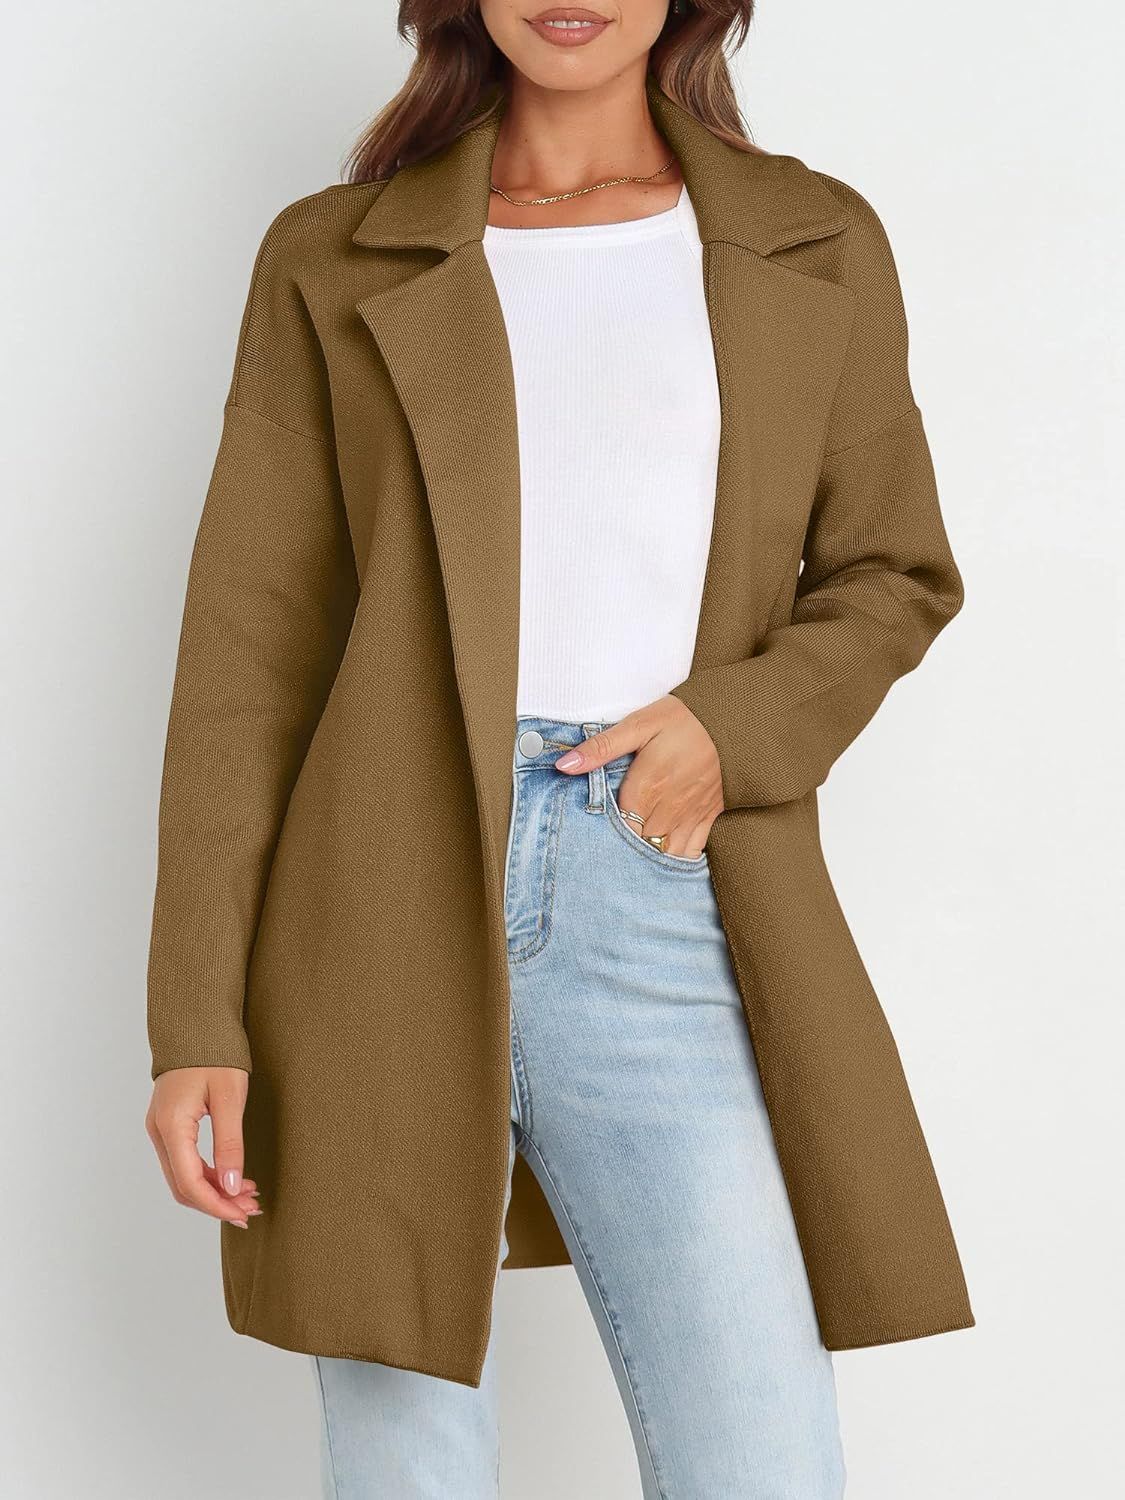 ANRABESS Women’s Coatigan Jacket Long Sleeve Open Front Cardigan Coat Chunky Lapel Blazer Sweat... | Amazon (US)